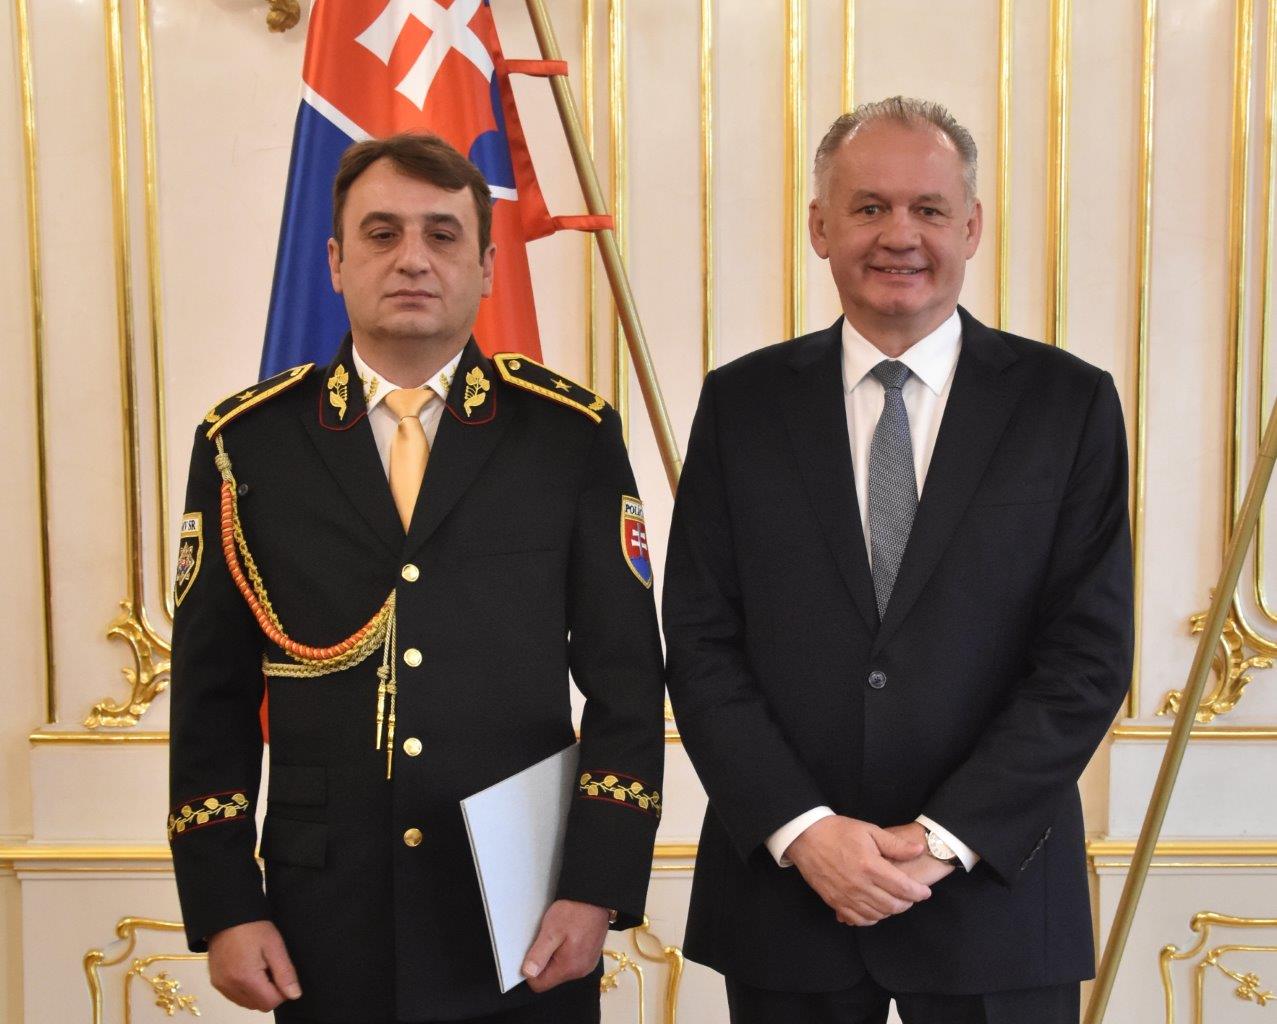 Gen. Róbert Bozalka s prezidentom Andrejom Kiskom